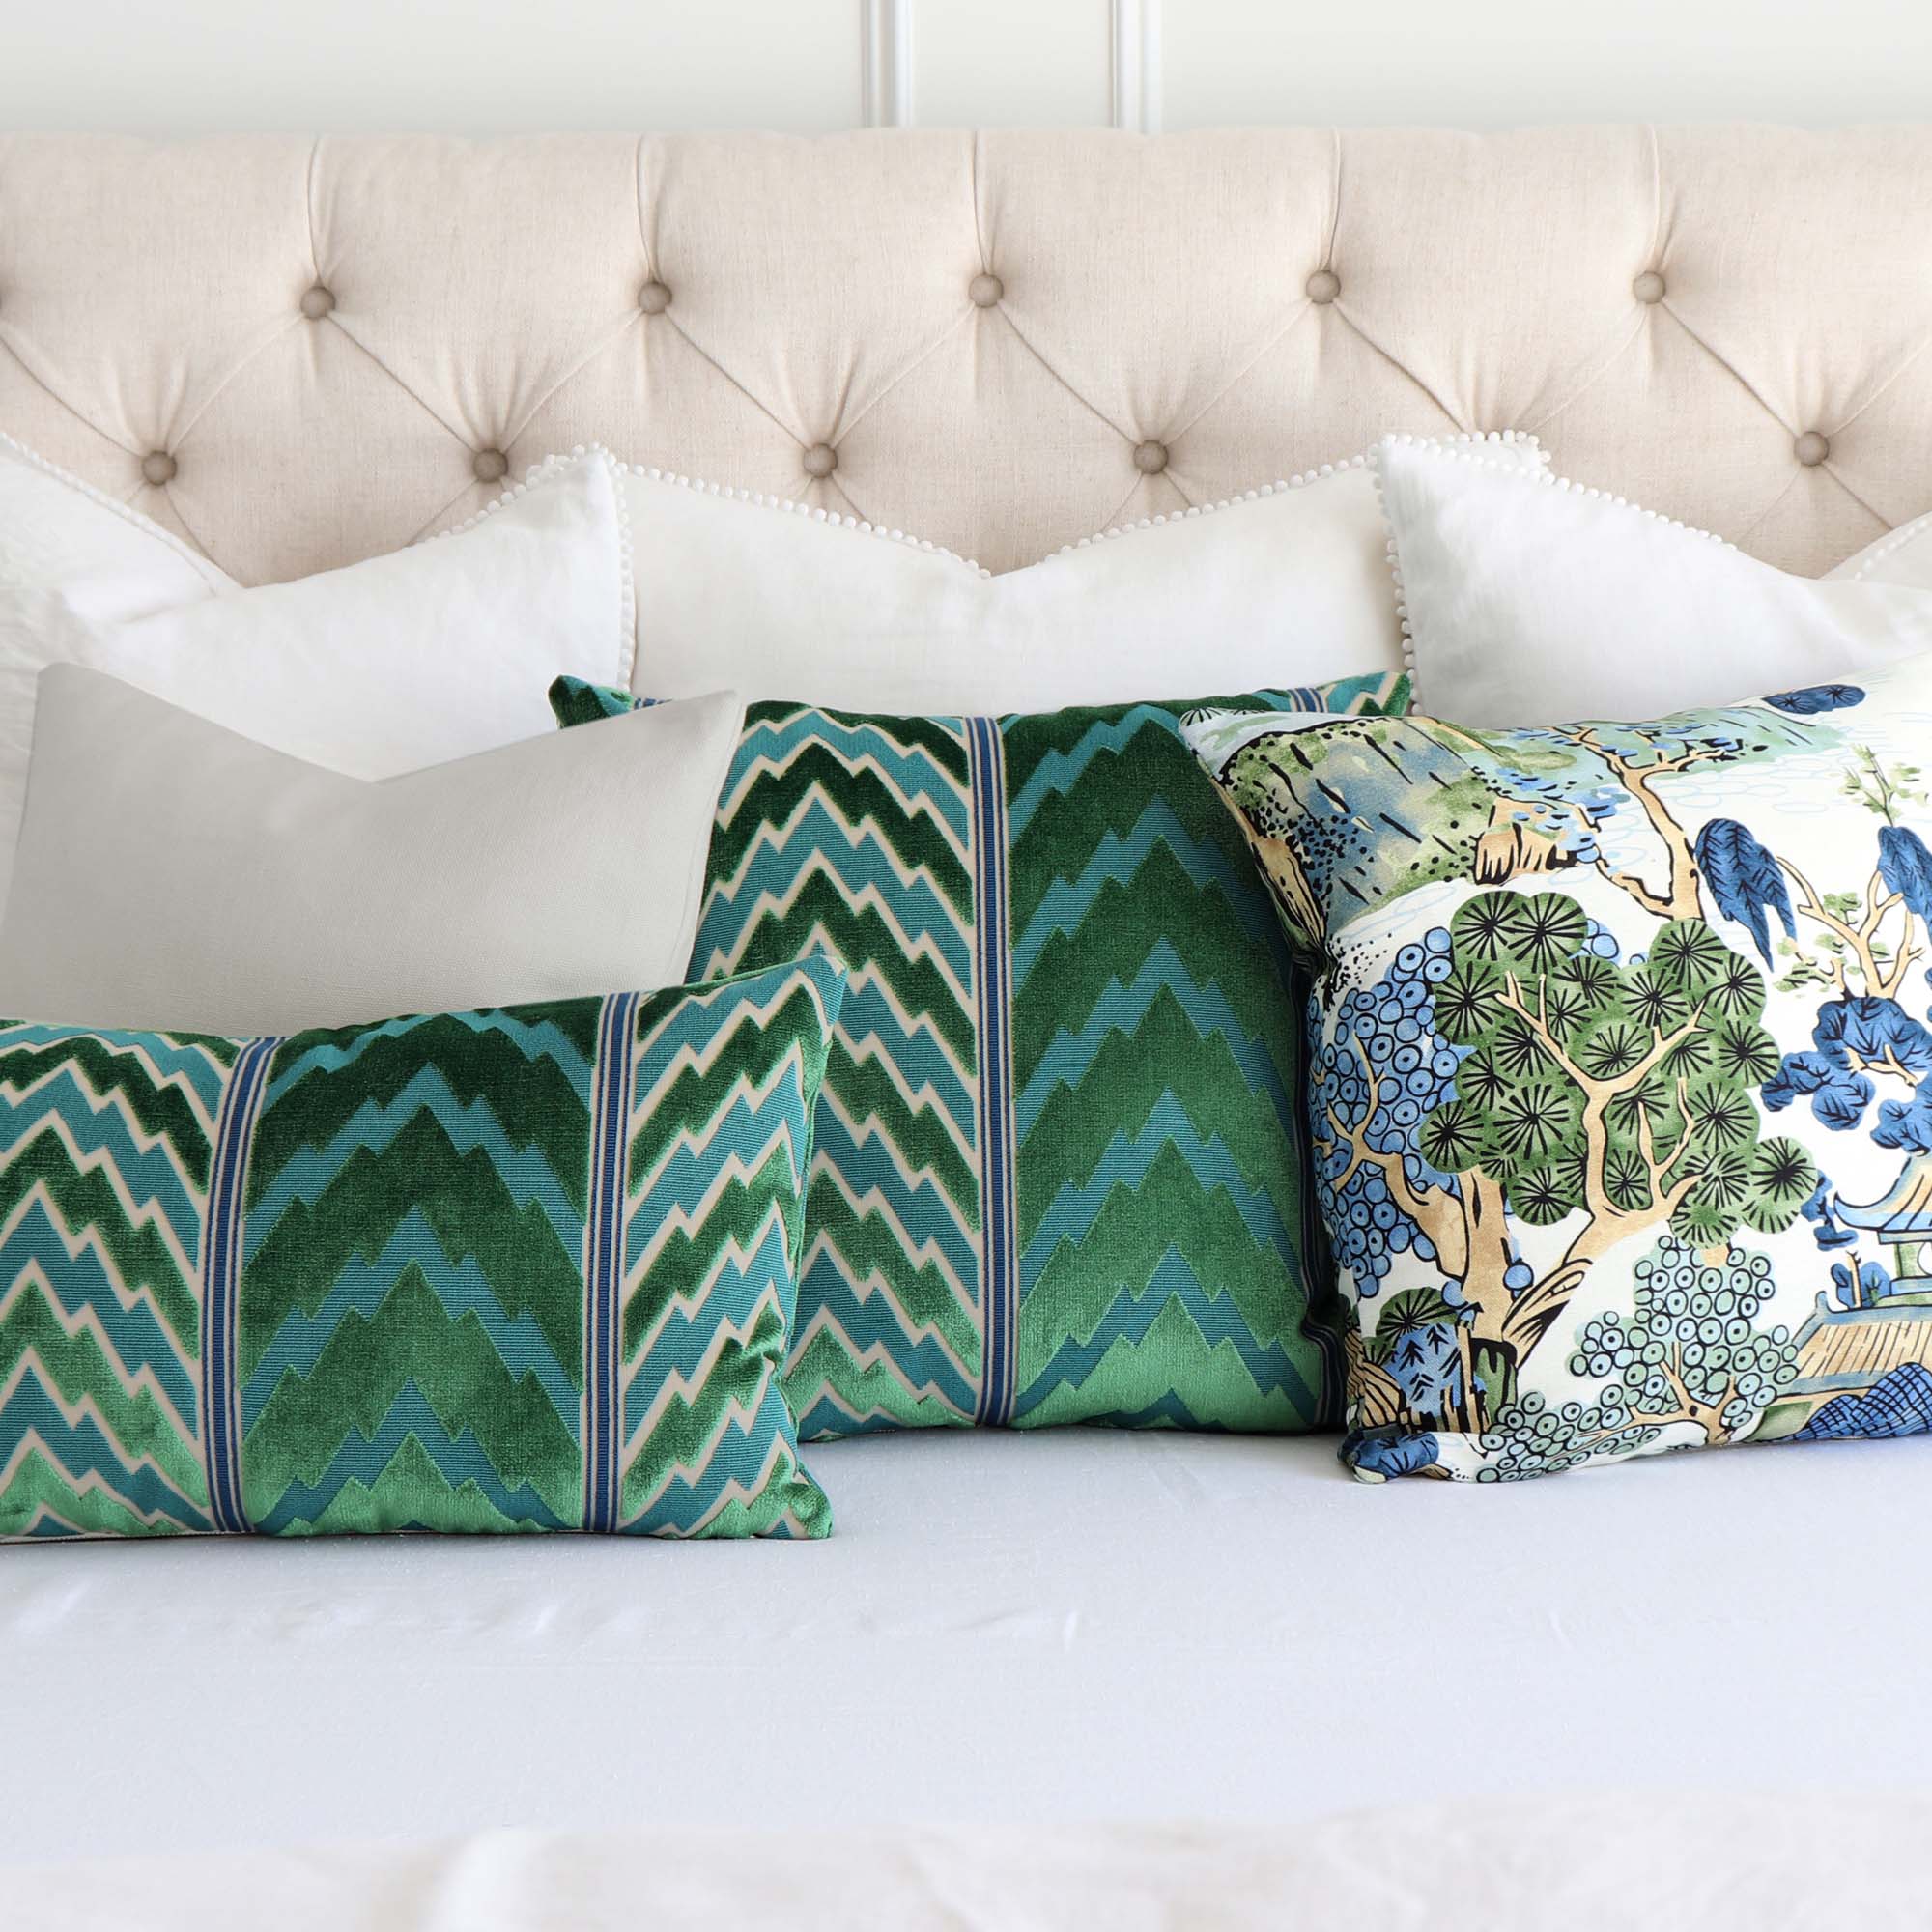 Schumacher Florentine Emerald Green Velvet Flame Stitch Designer Luxury Decorative Throw Pillow Cover with Matching Decorative Pillows